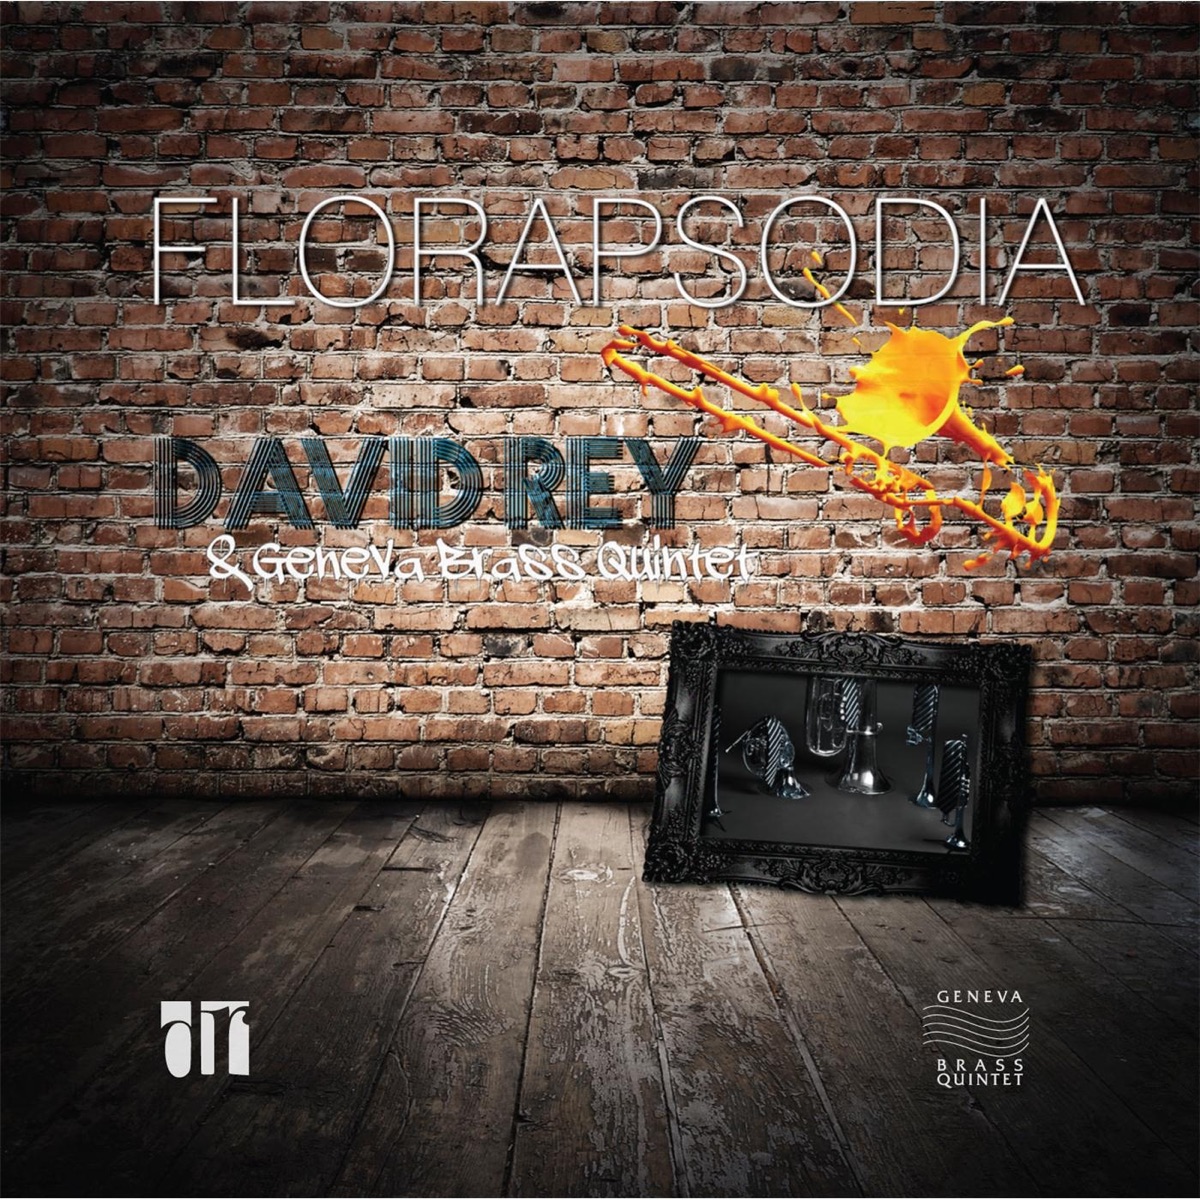 Florapsodia - Album by David Rey & Geneva Brass Quintet